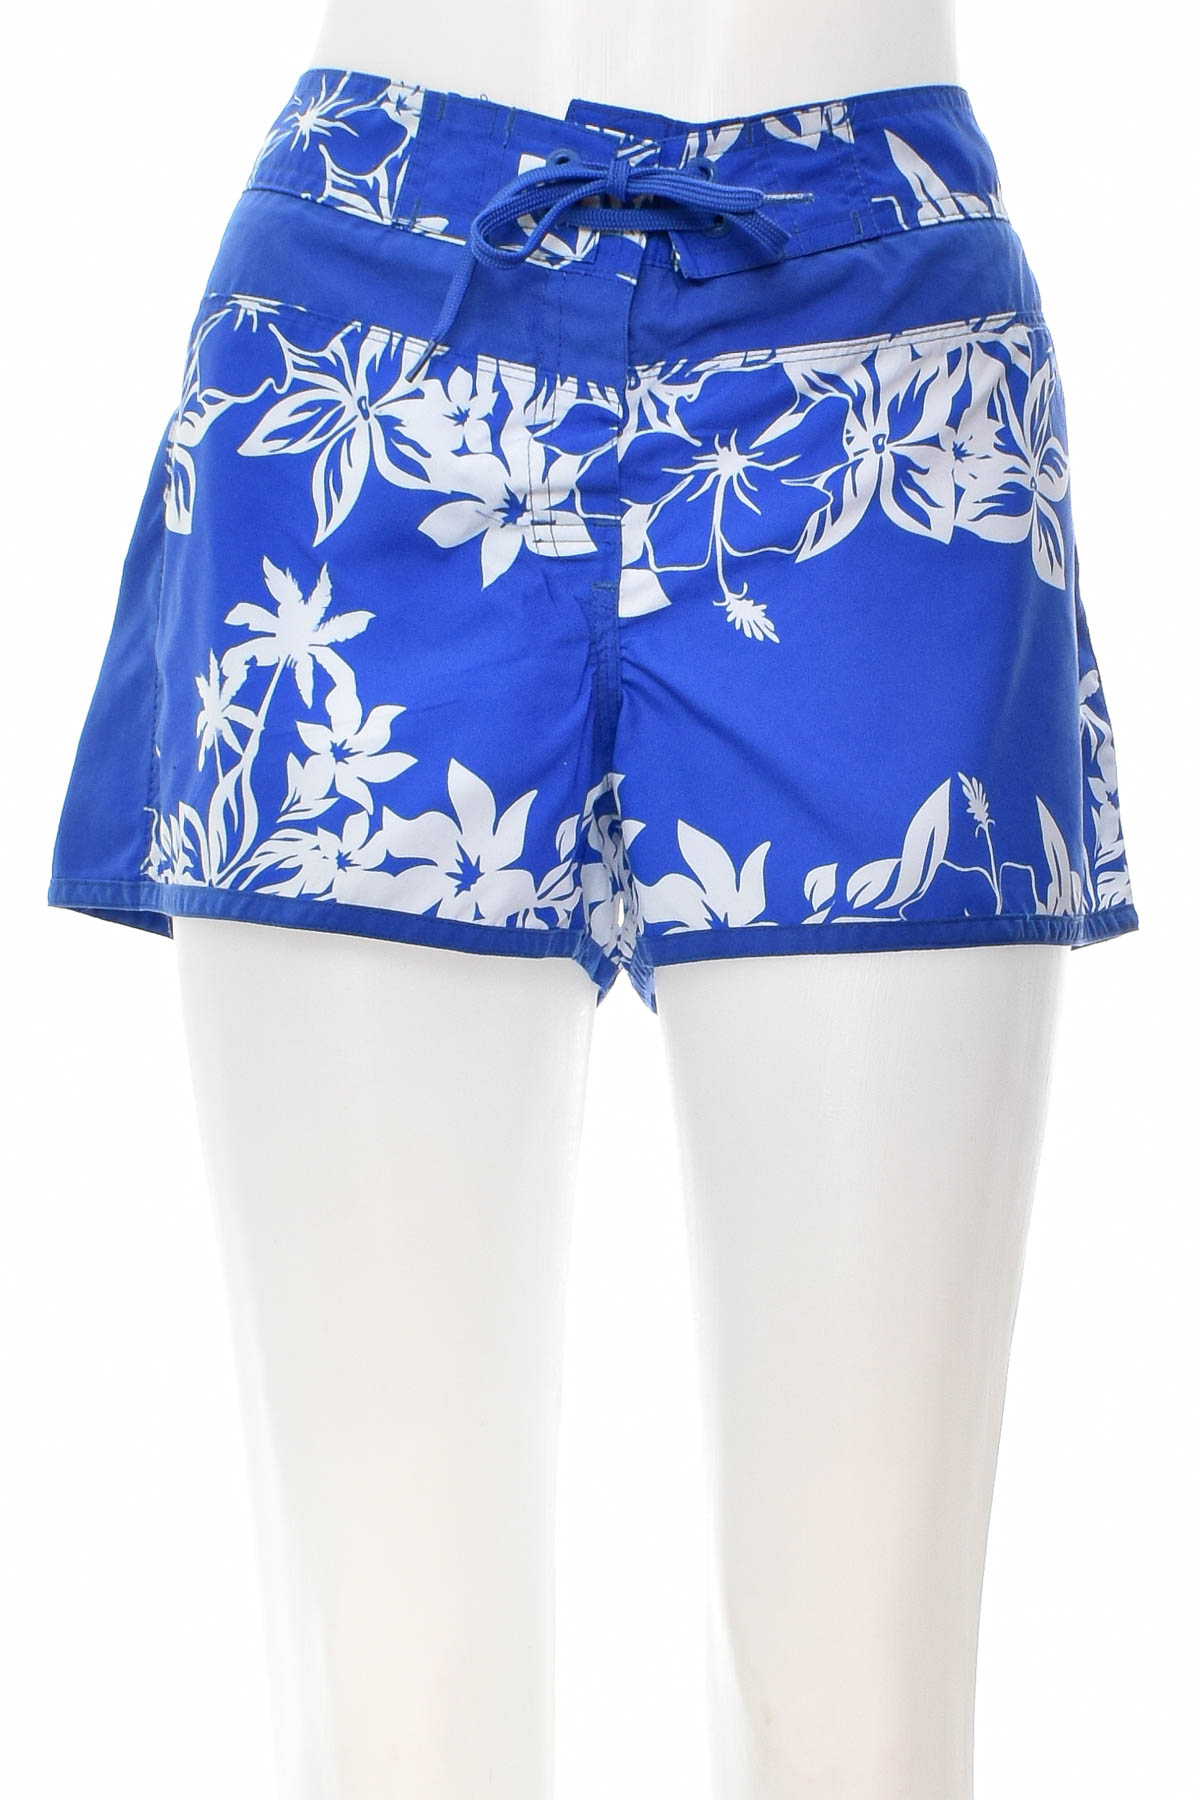 Female shorts - Tribord - 0